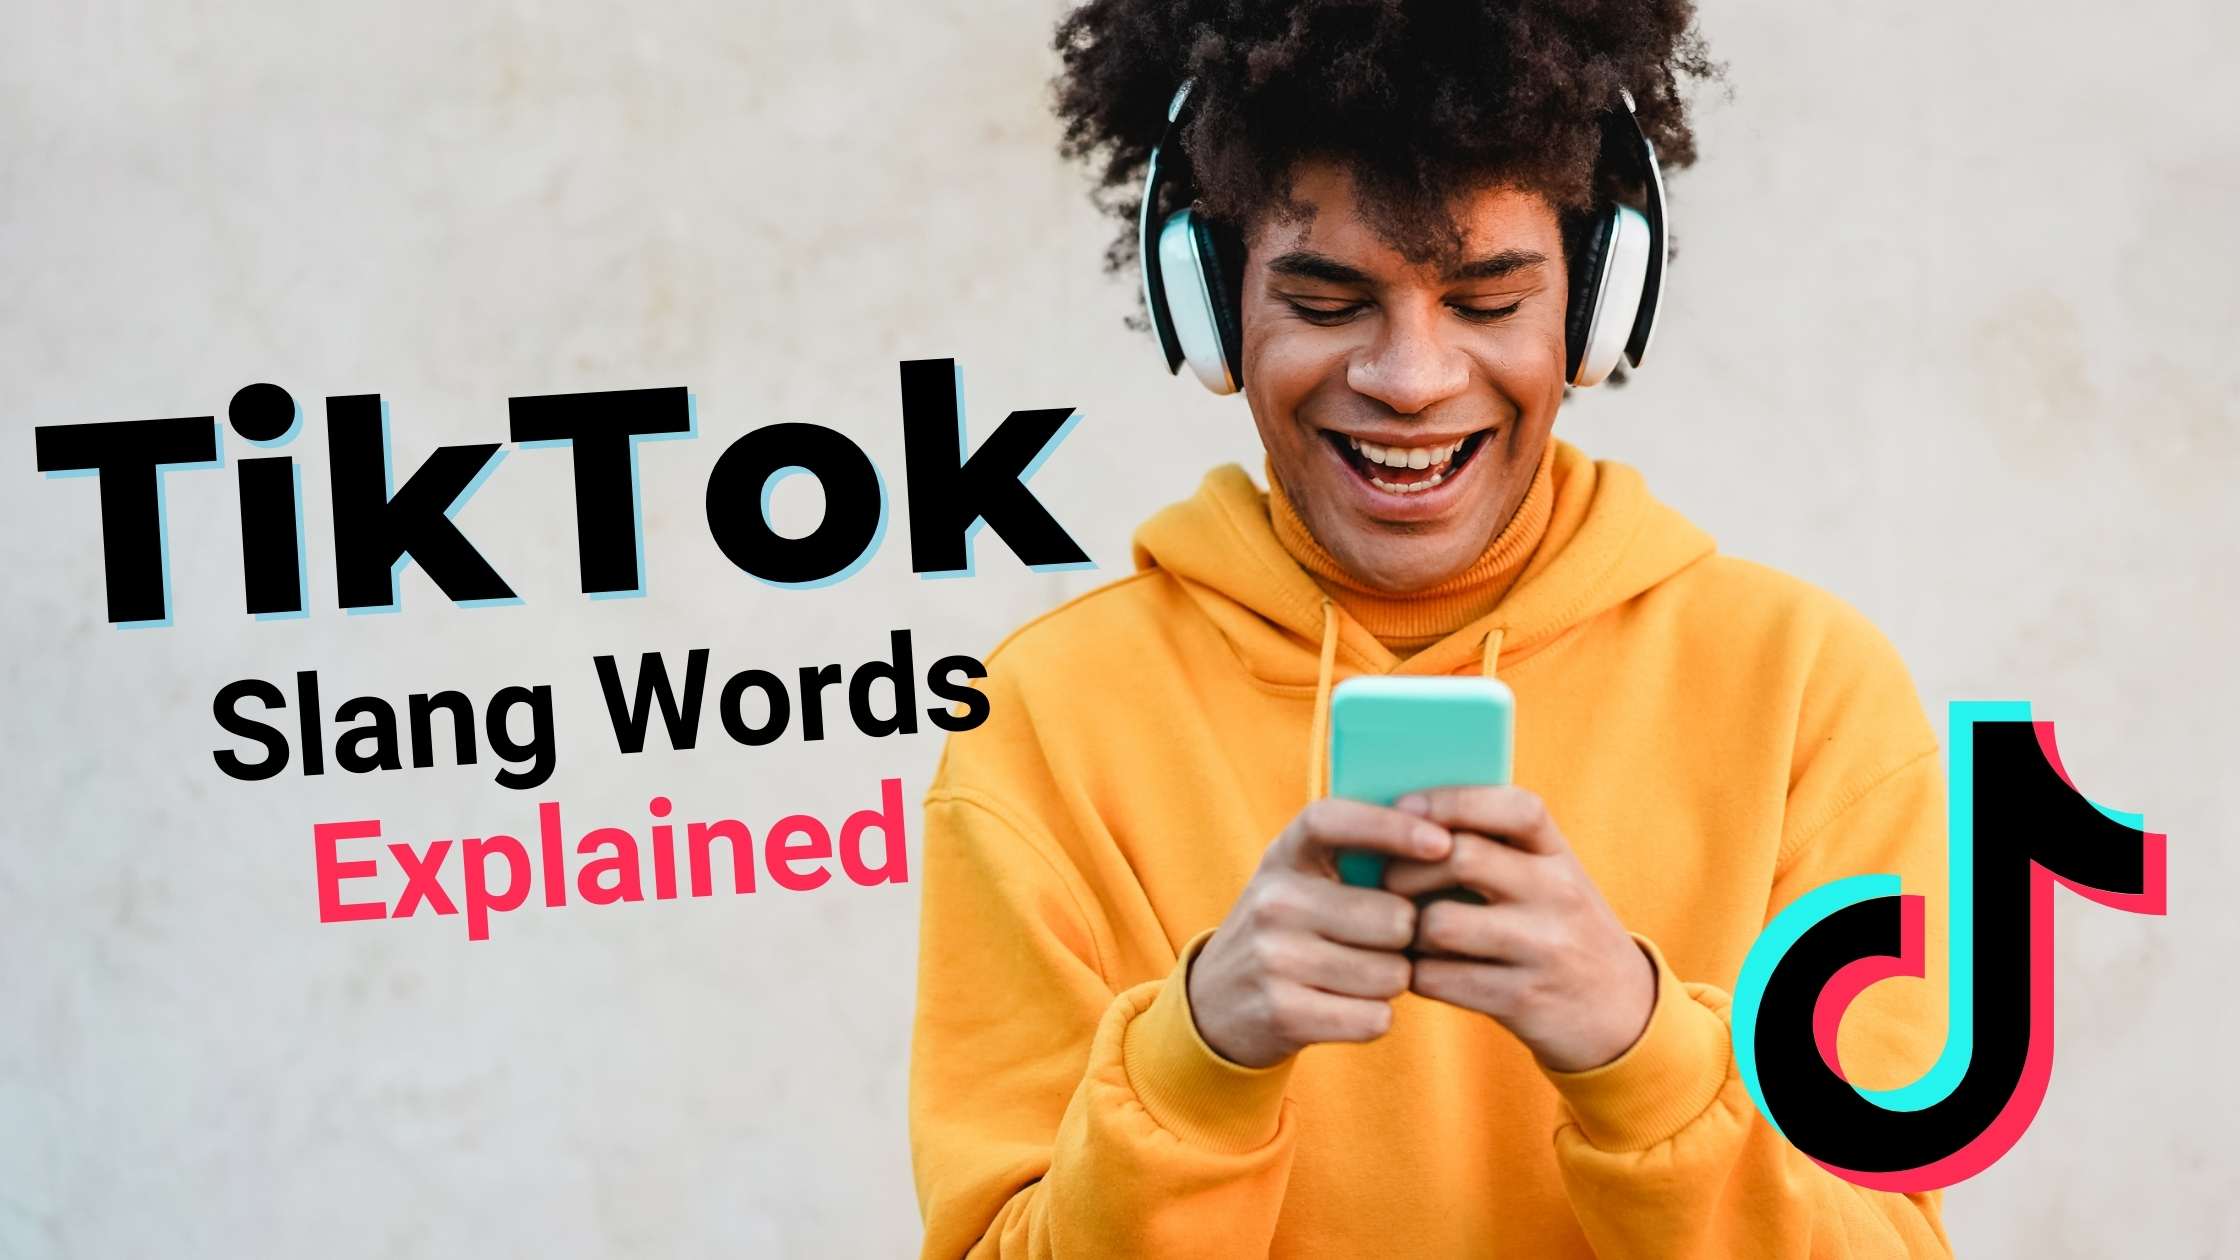 tiktok slang words explained in English